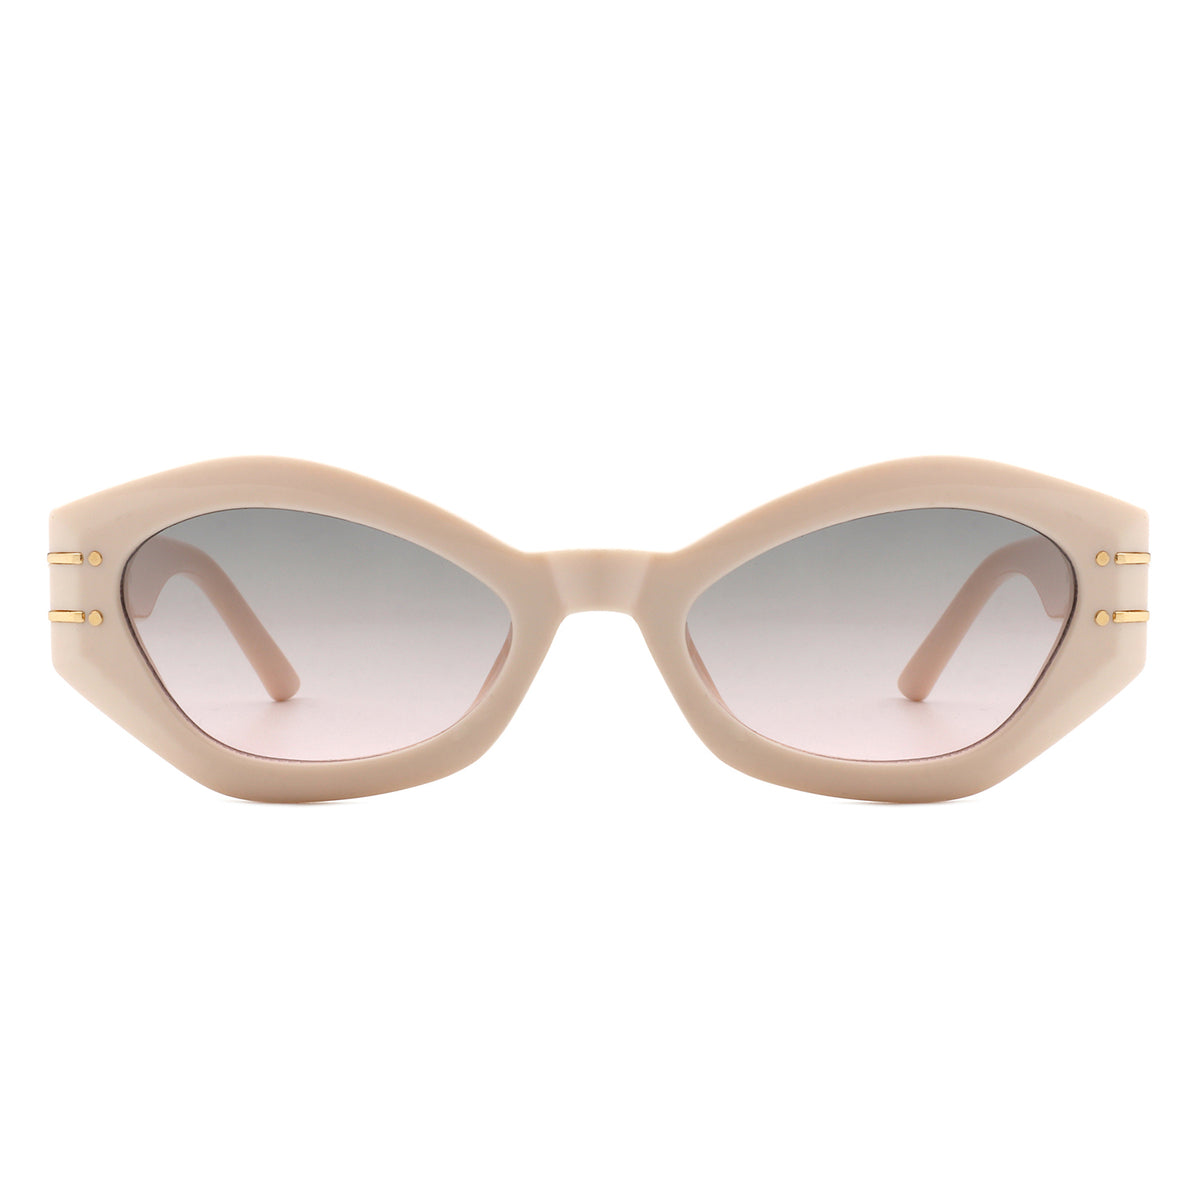 S2116 - Geometric Oval Slim Fashion Round Cat Eye Sunglasses